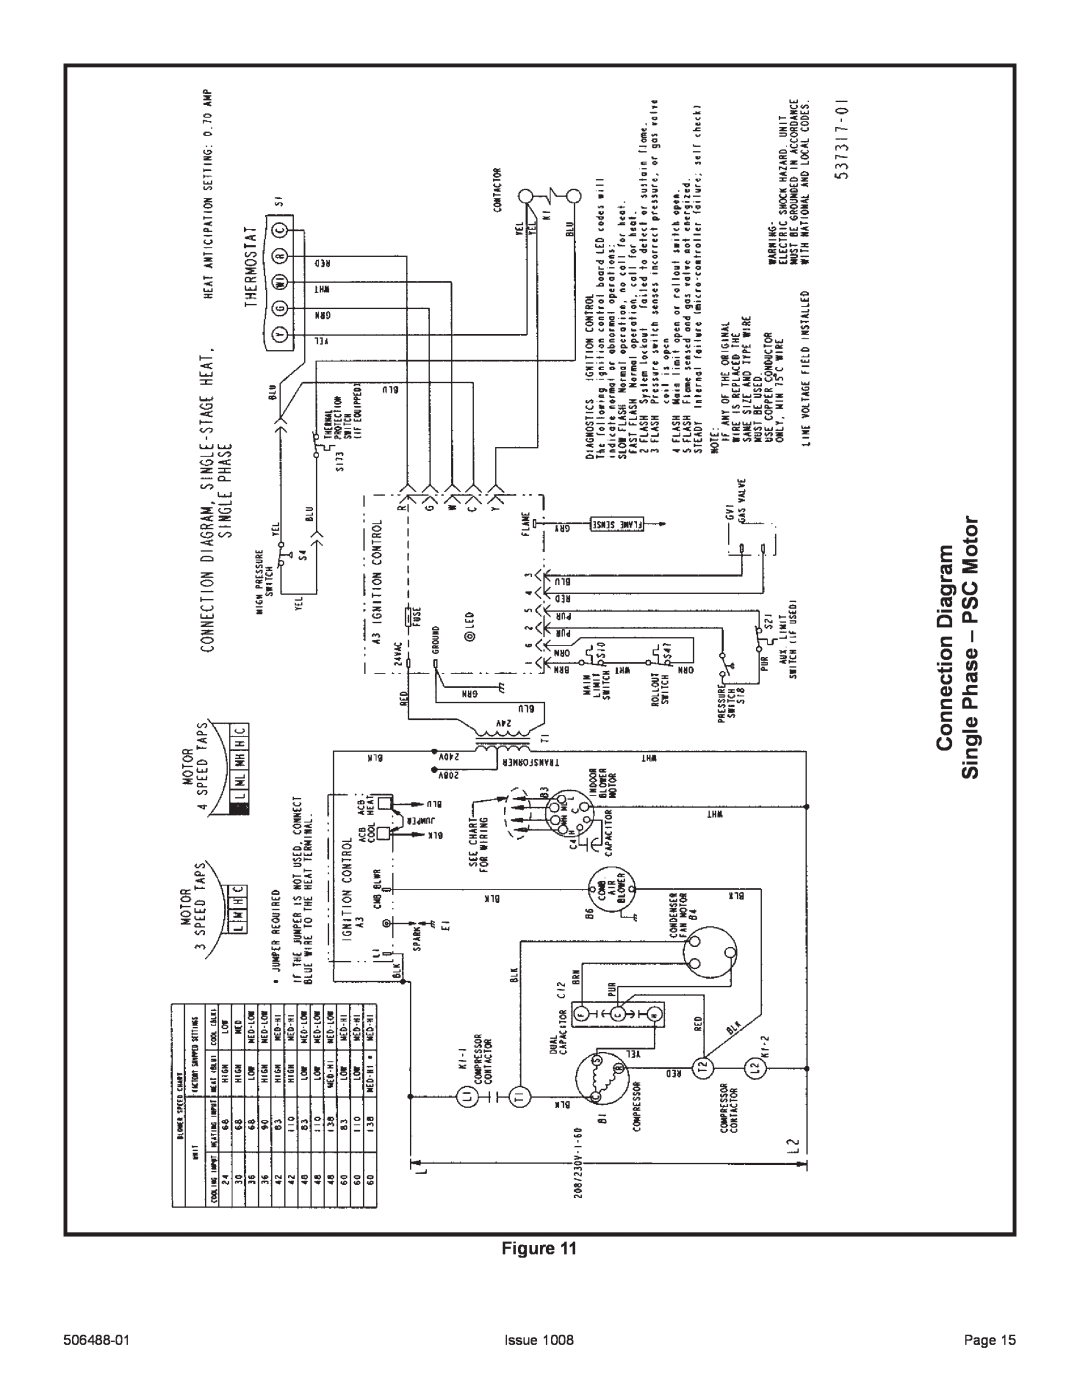 Allied Air Enterprises 4PGE manual Diagram, PSC Motor, Connection, Single Phase 